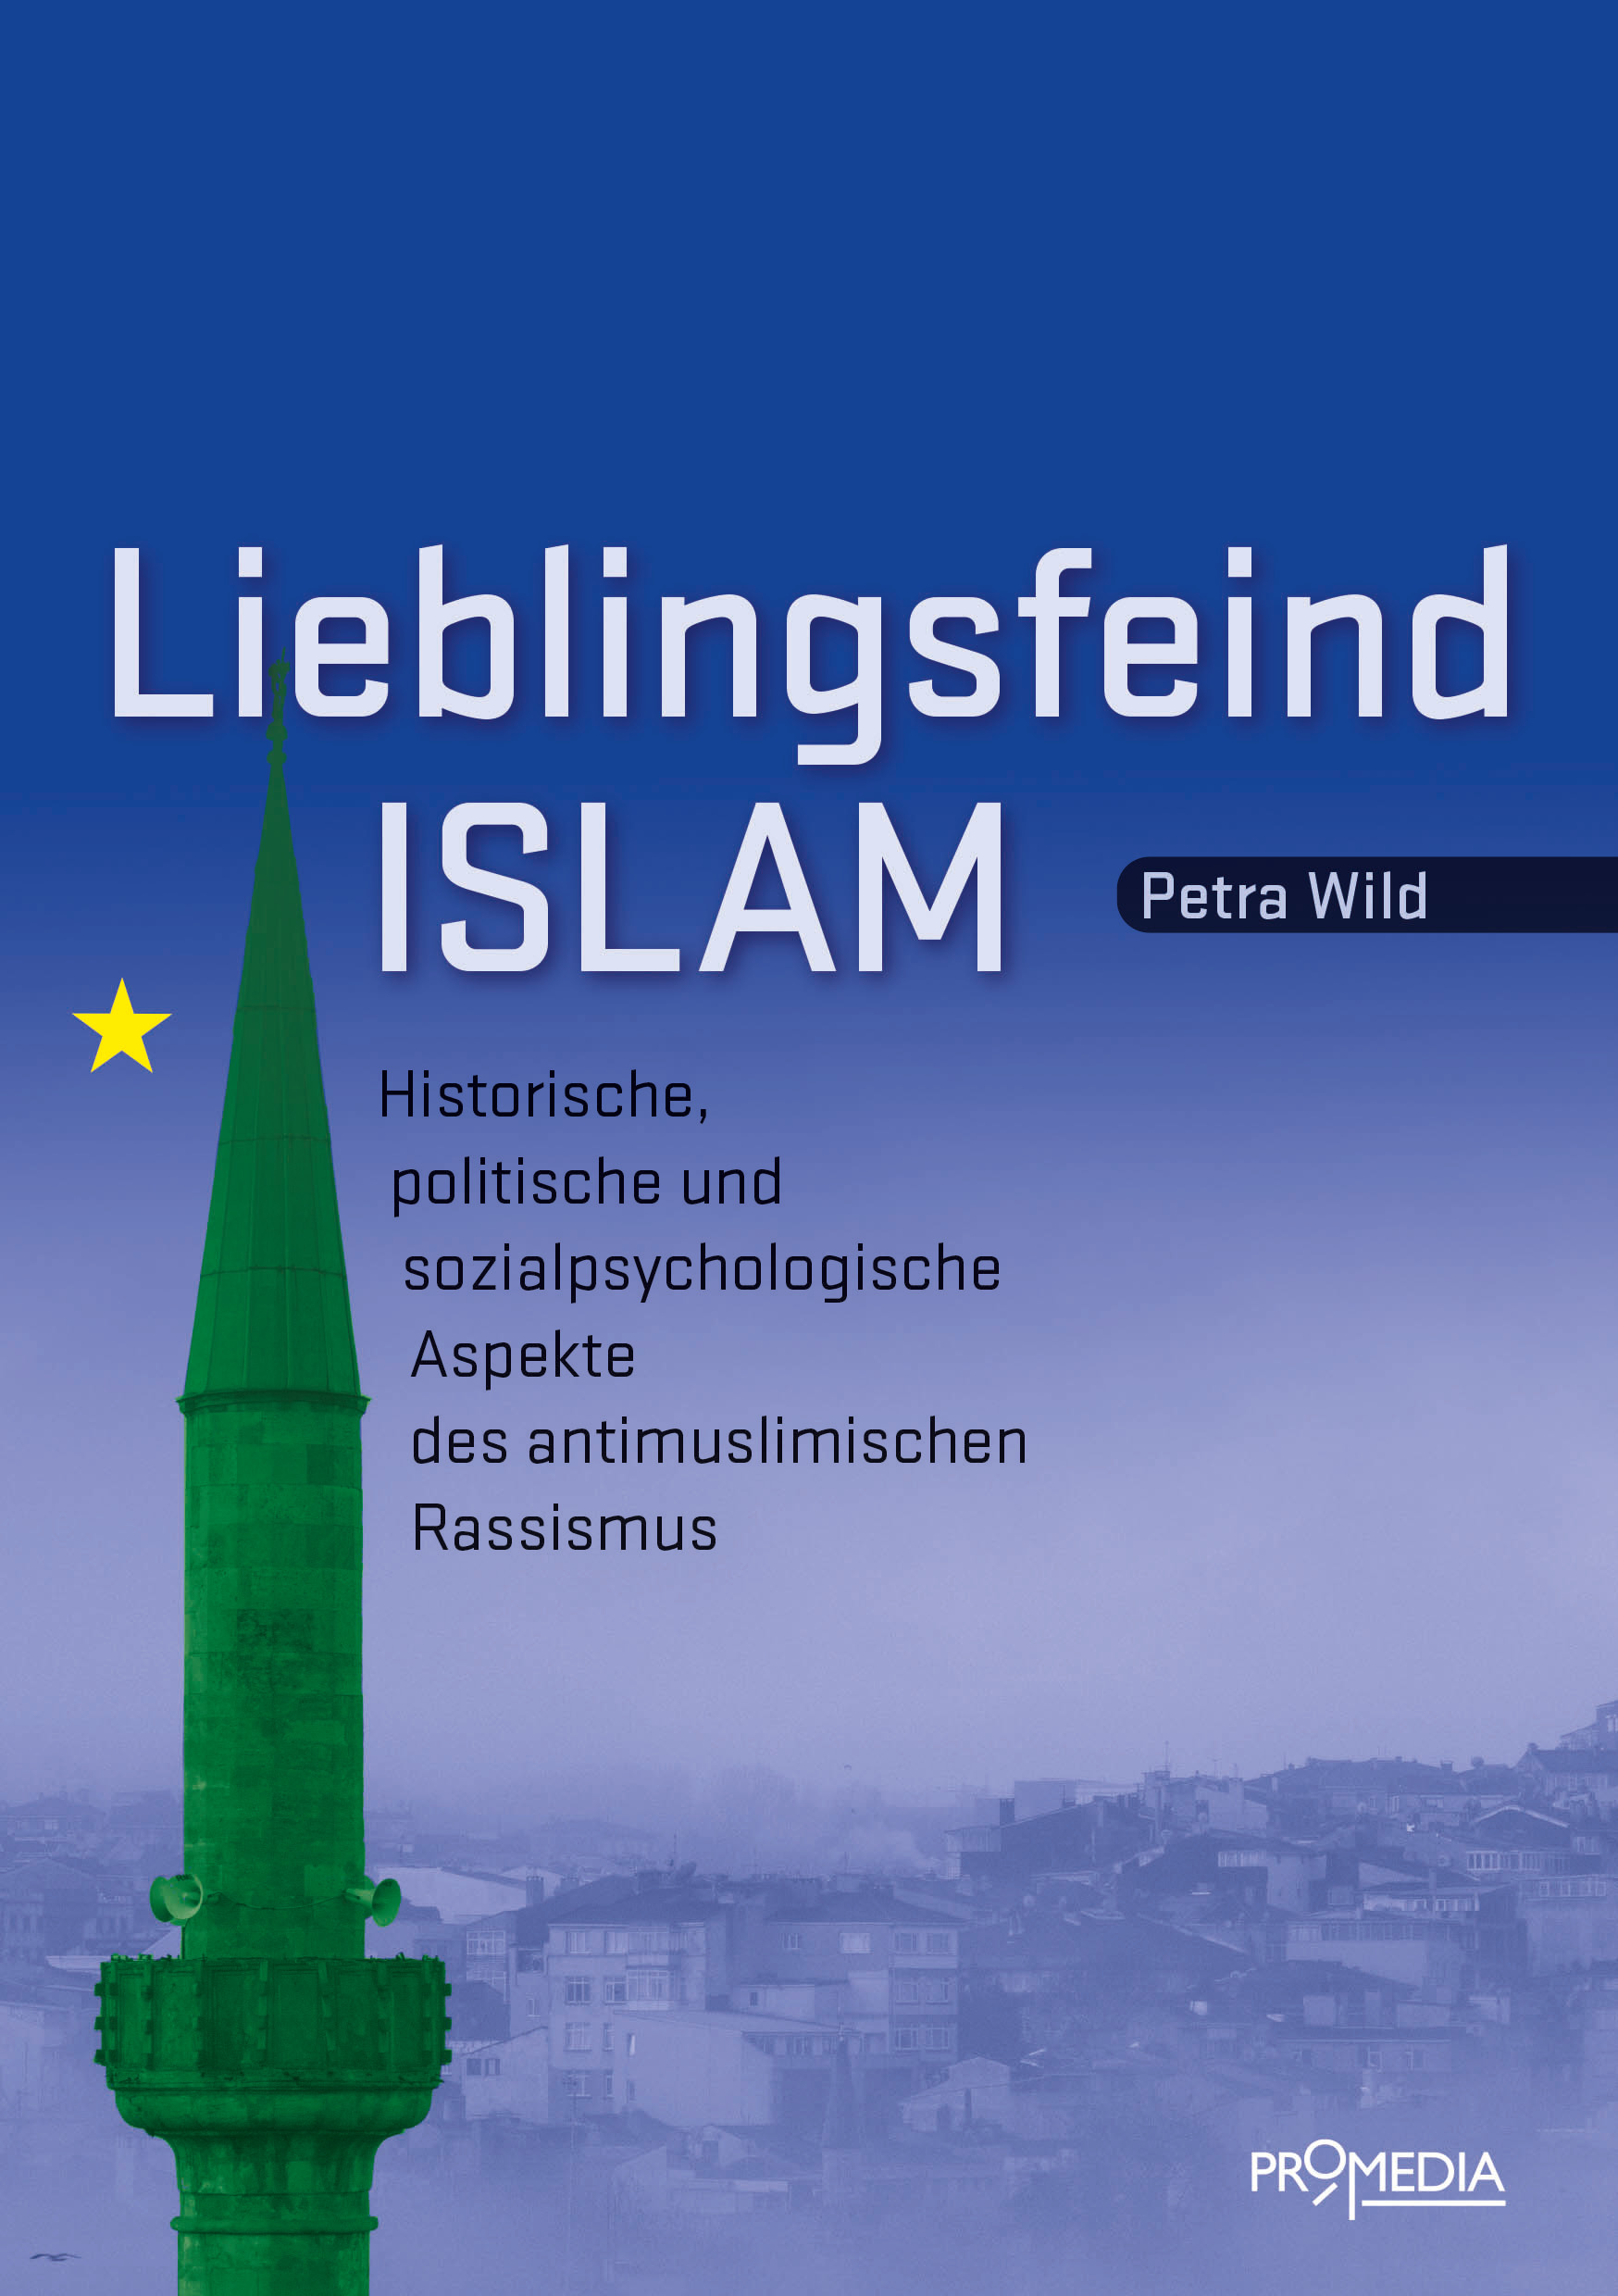 [Cover] Lieblingsfeind Islam